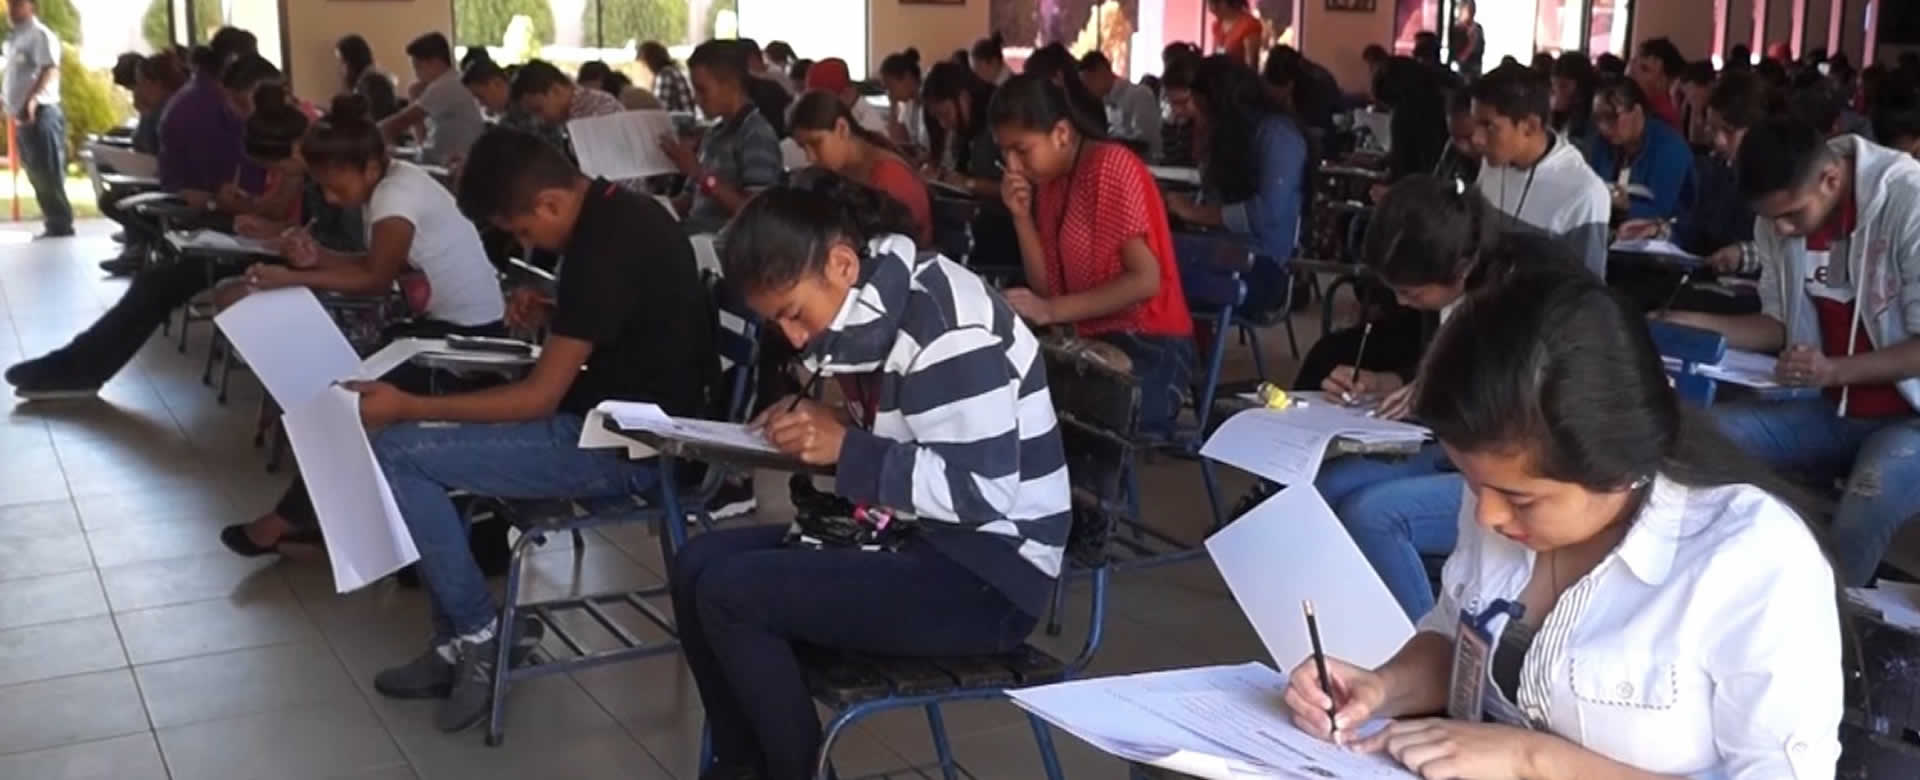 Miles de Bachilleres realizan examen de admisión en la FAREM-Estelí